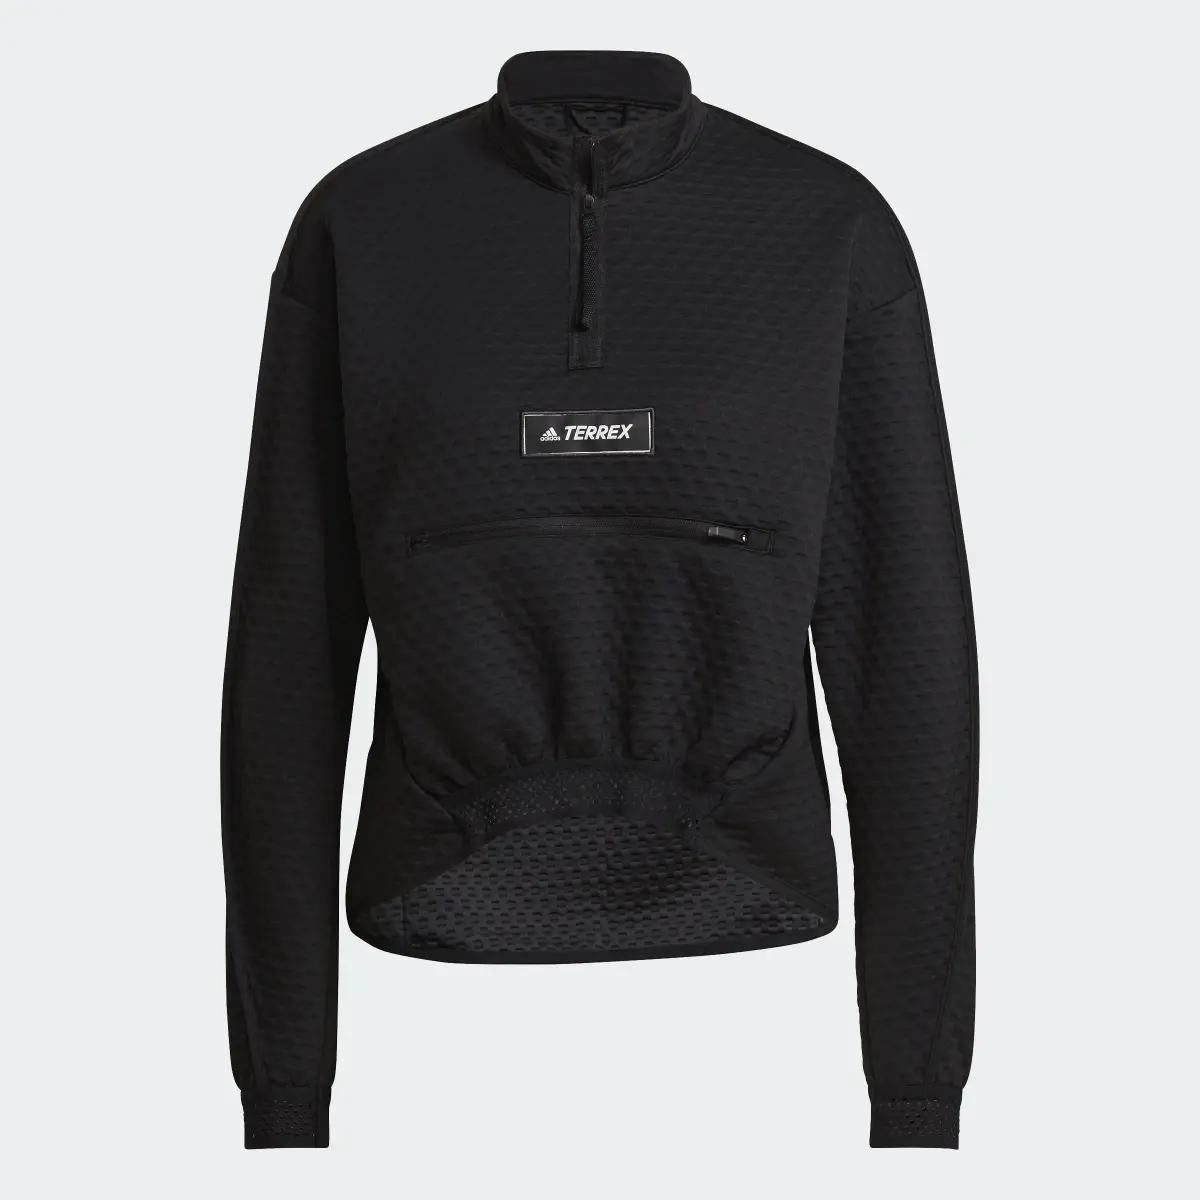 Adidas Sweatshirt de Caminhada em Fleece TERREX. 1